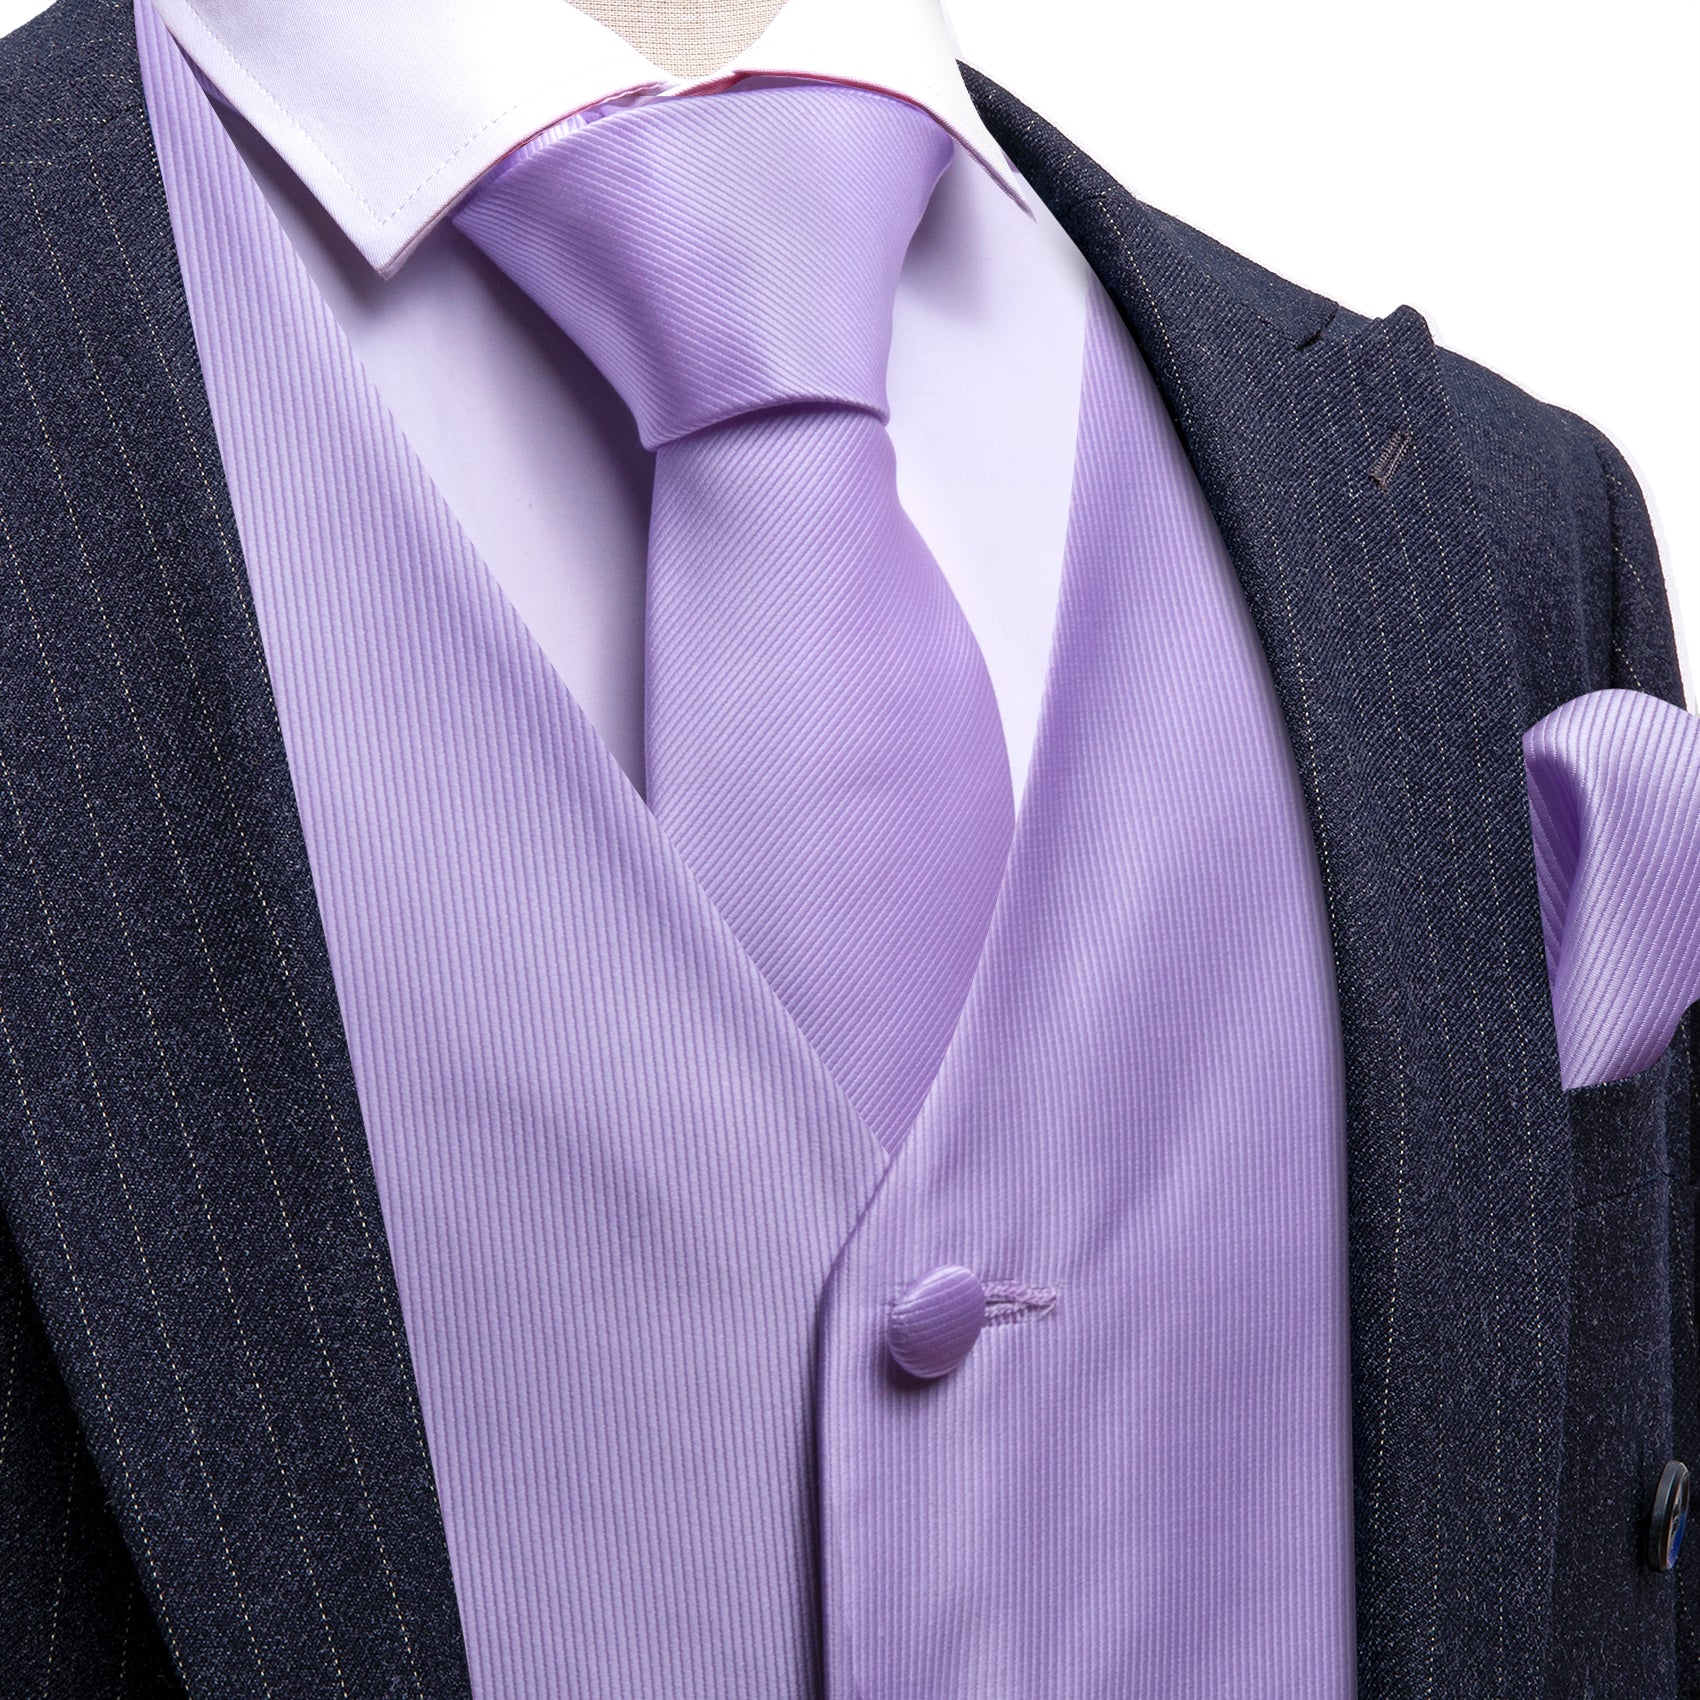 Black suit and Light Purple waistcoat and purple solid ties